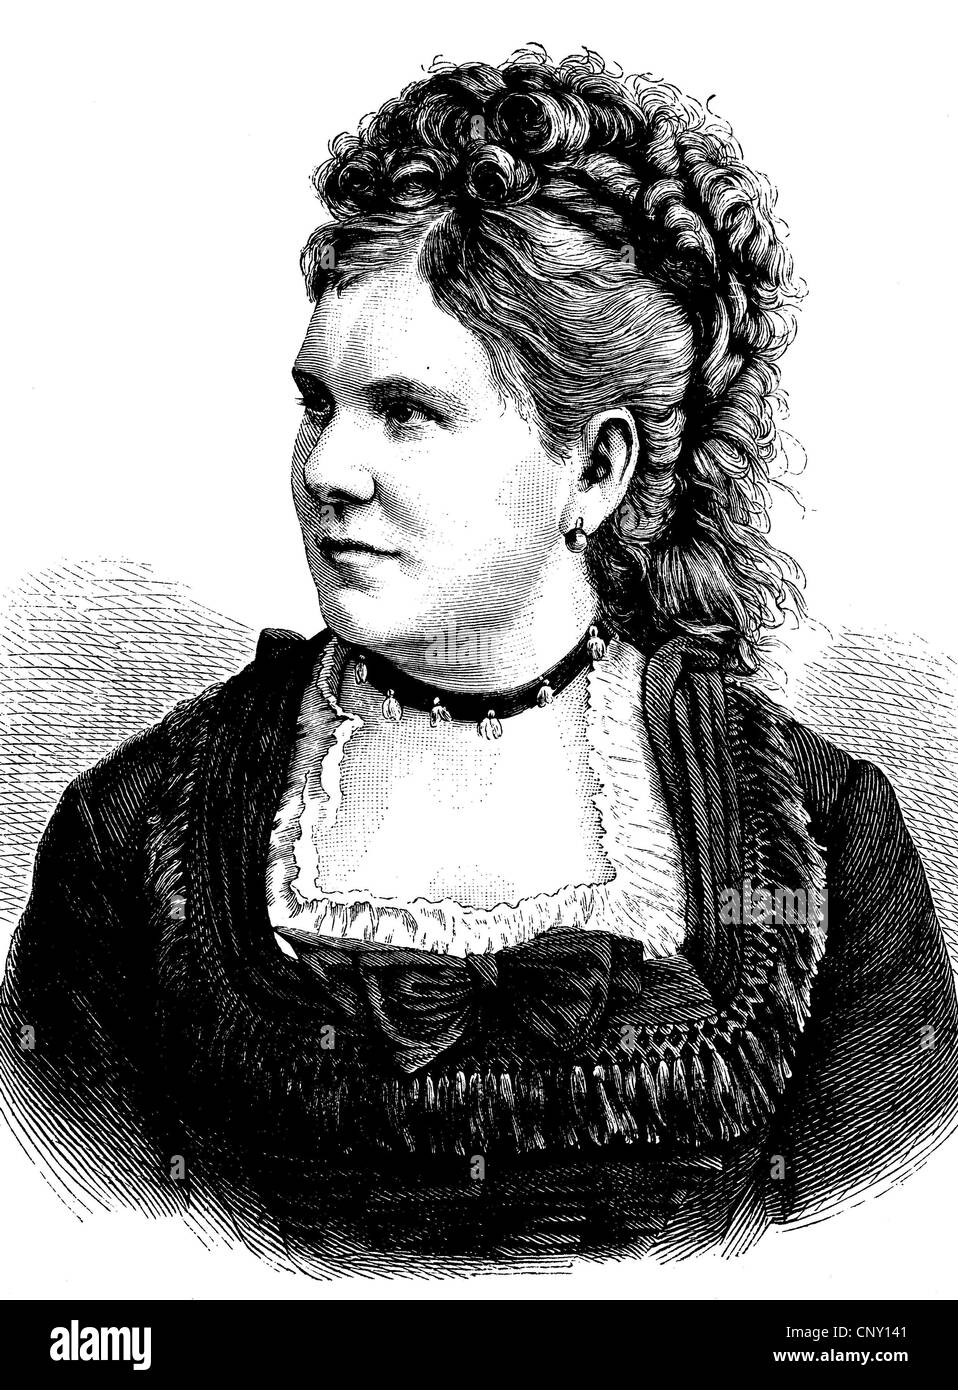 Vilma von Voggenhuber, 1841 - 1888, a soprano singer, historical engraving, about 1889 Stock Photo